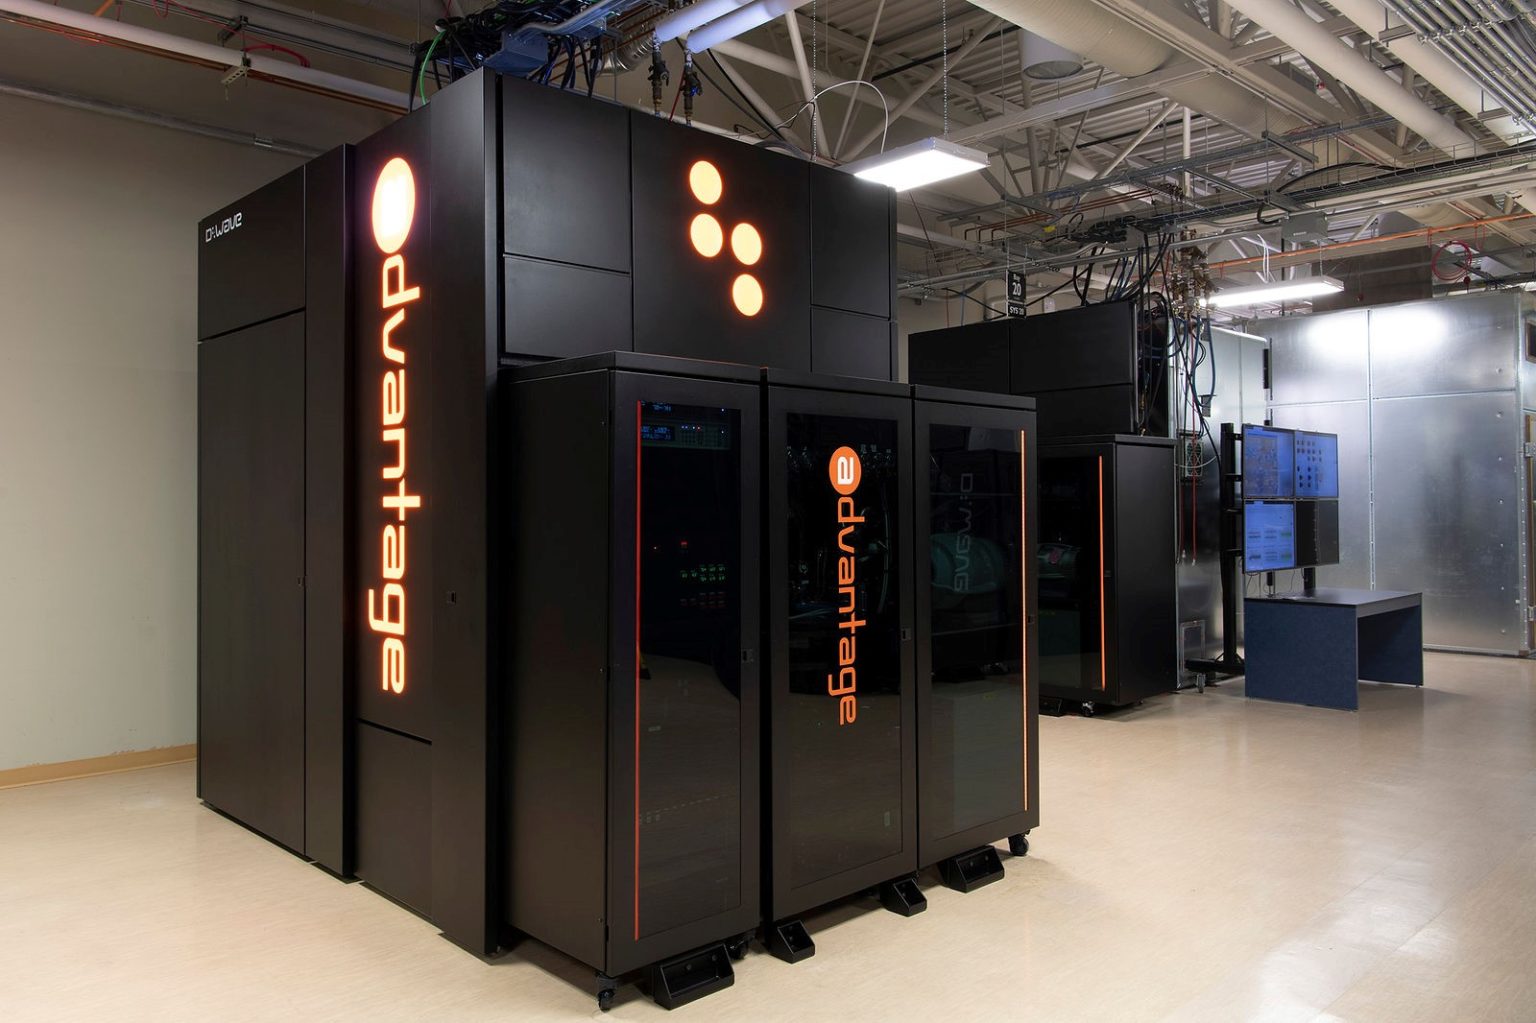 DWave Reveals the First Quantum Computer Built for Business